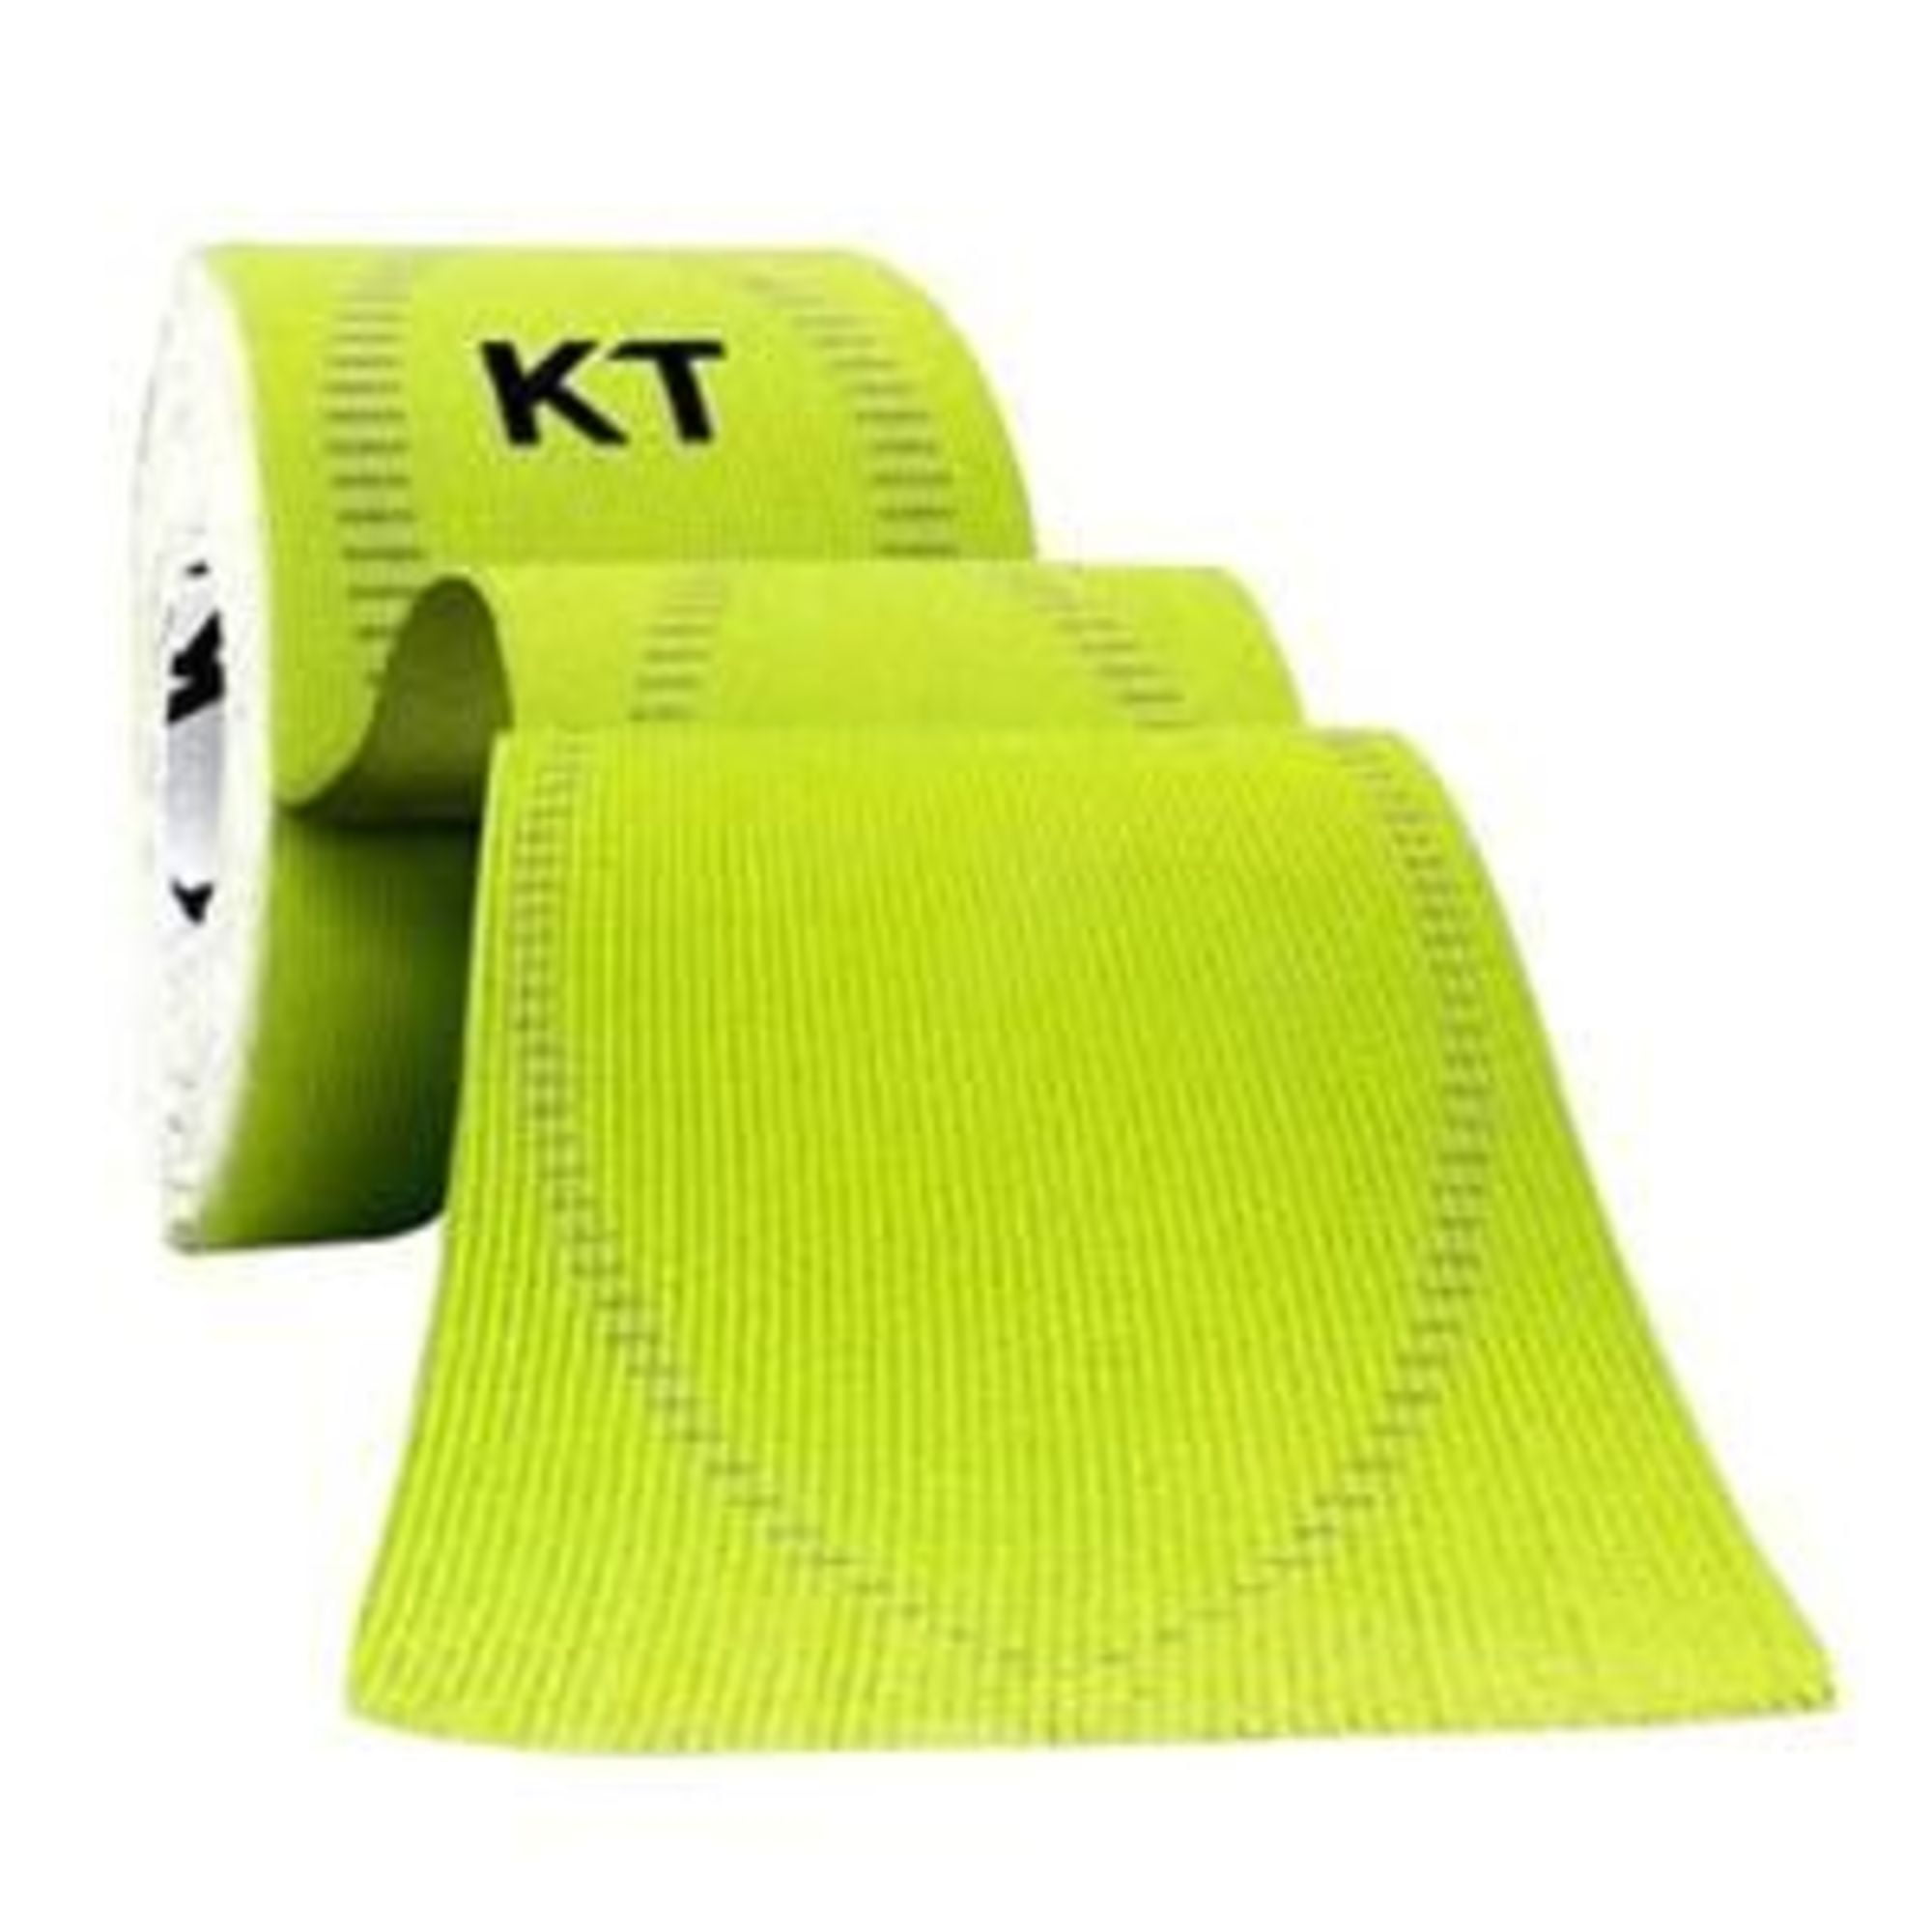 KT Tape Pro Kinesiology Elastic Sports Tape Support Winner Green 